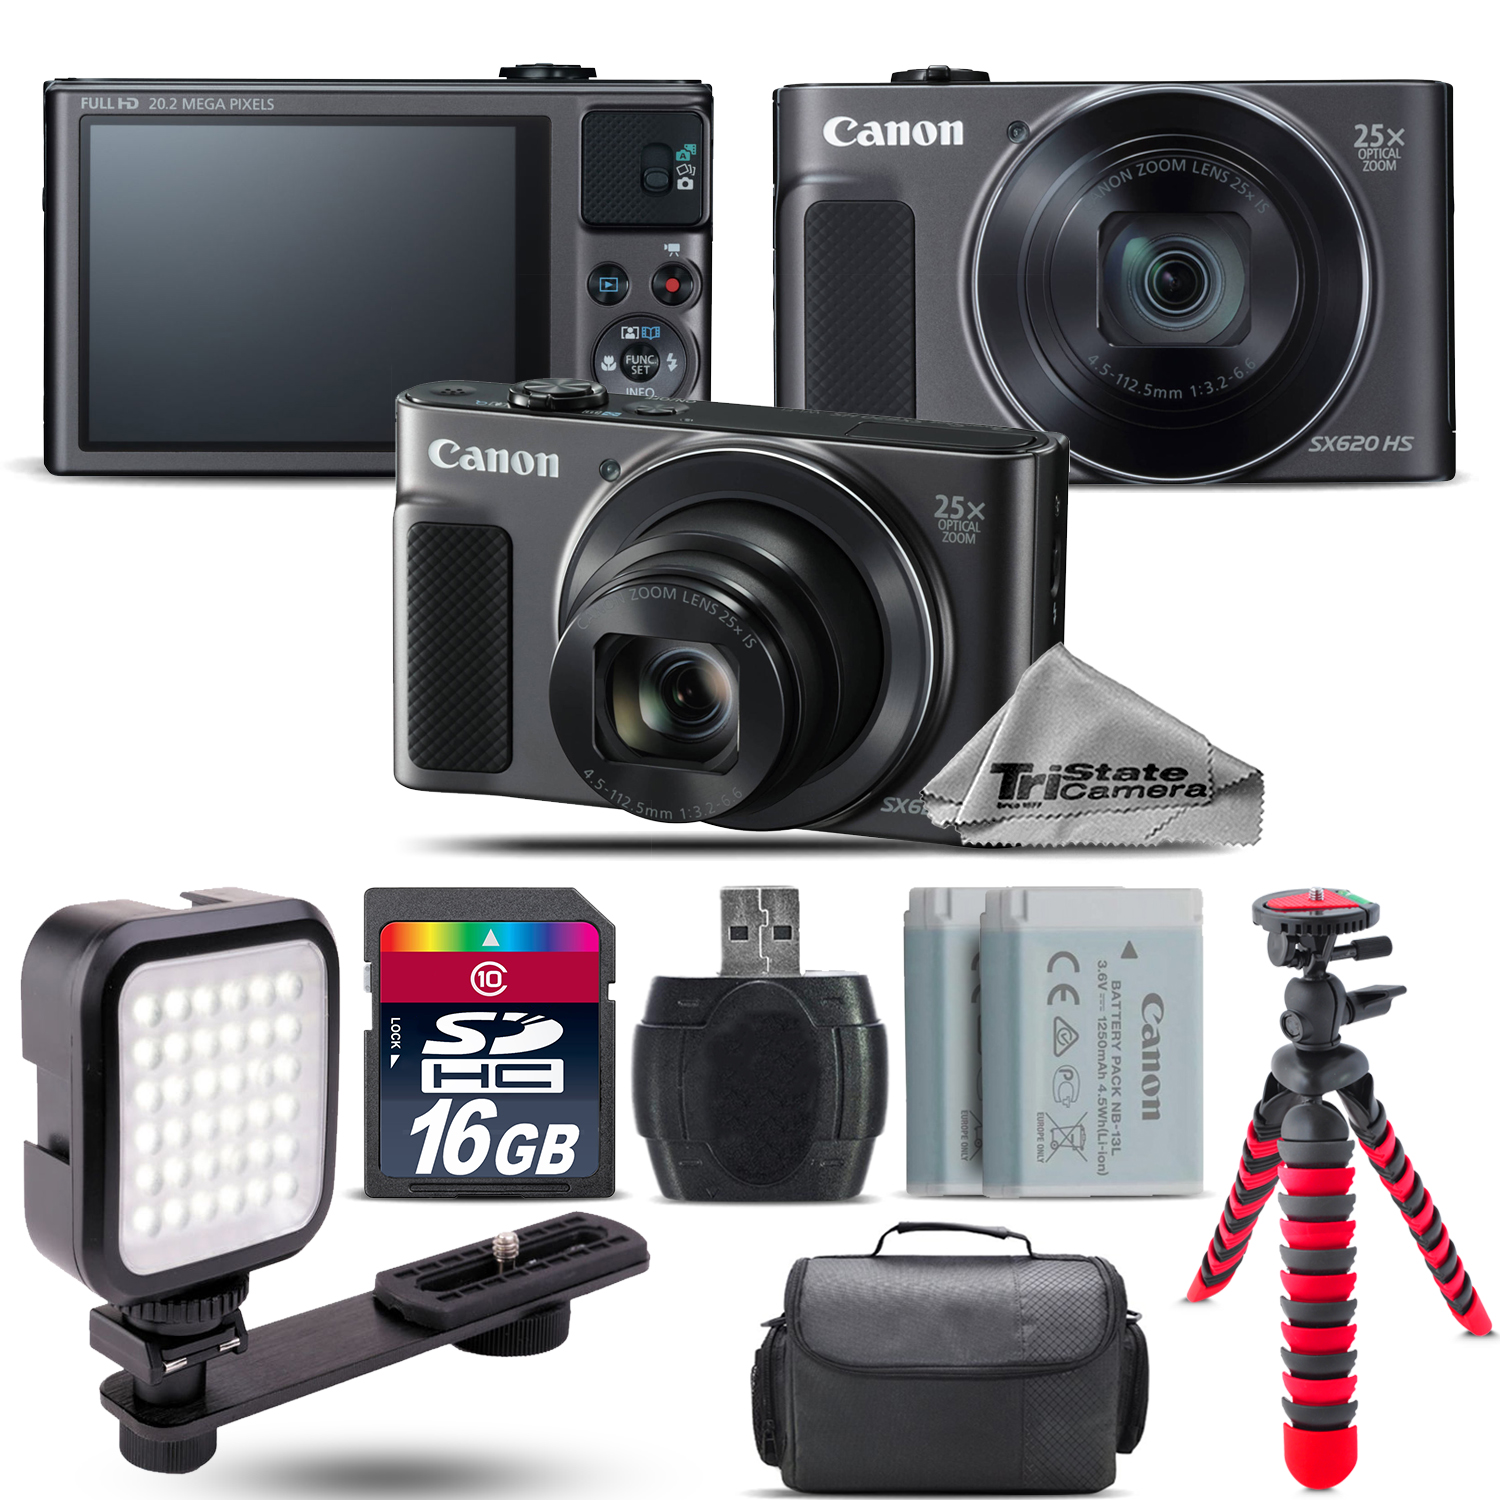 PowerShot SX620 HS Camera (Black) + Case + Spider Tripod + LED - 16GB Kit *FREE SHIPPING*